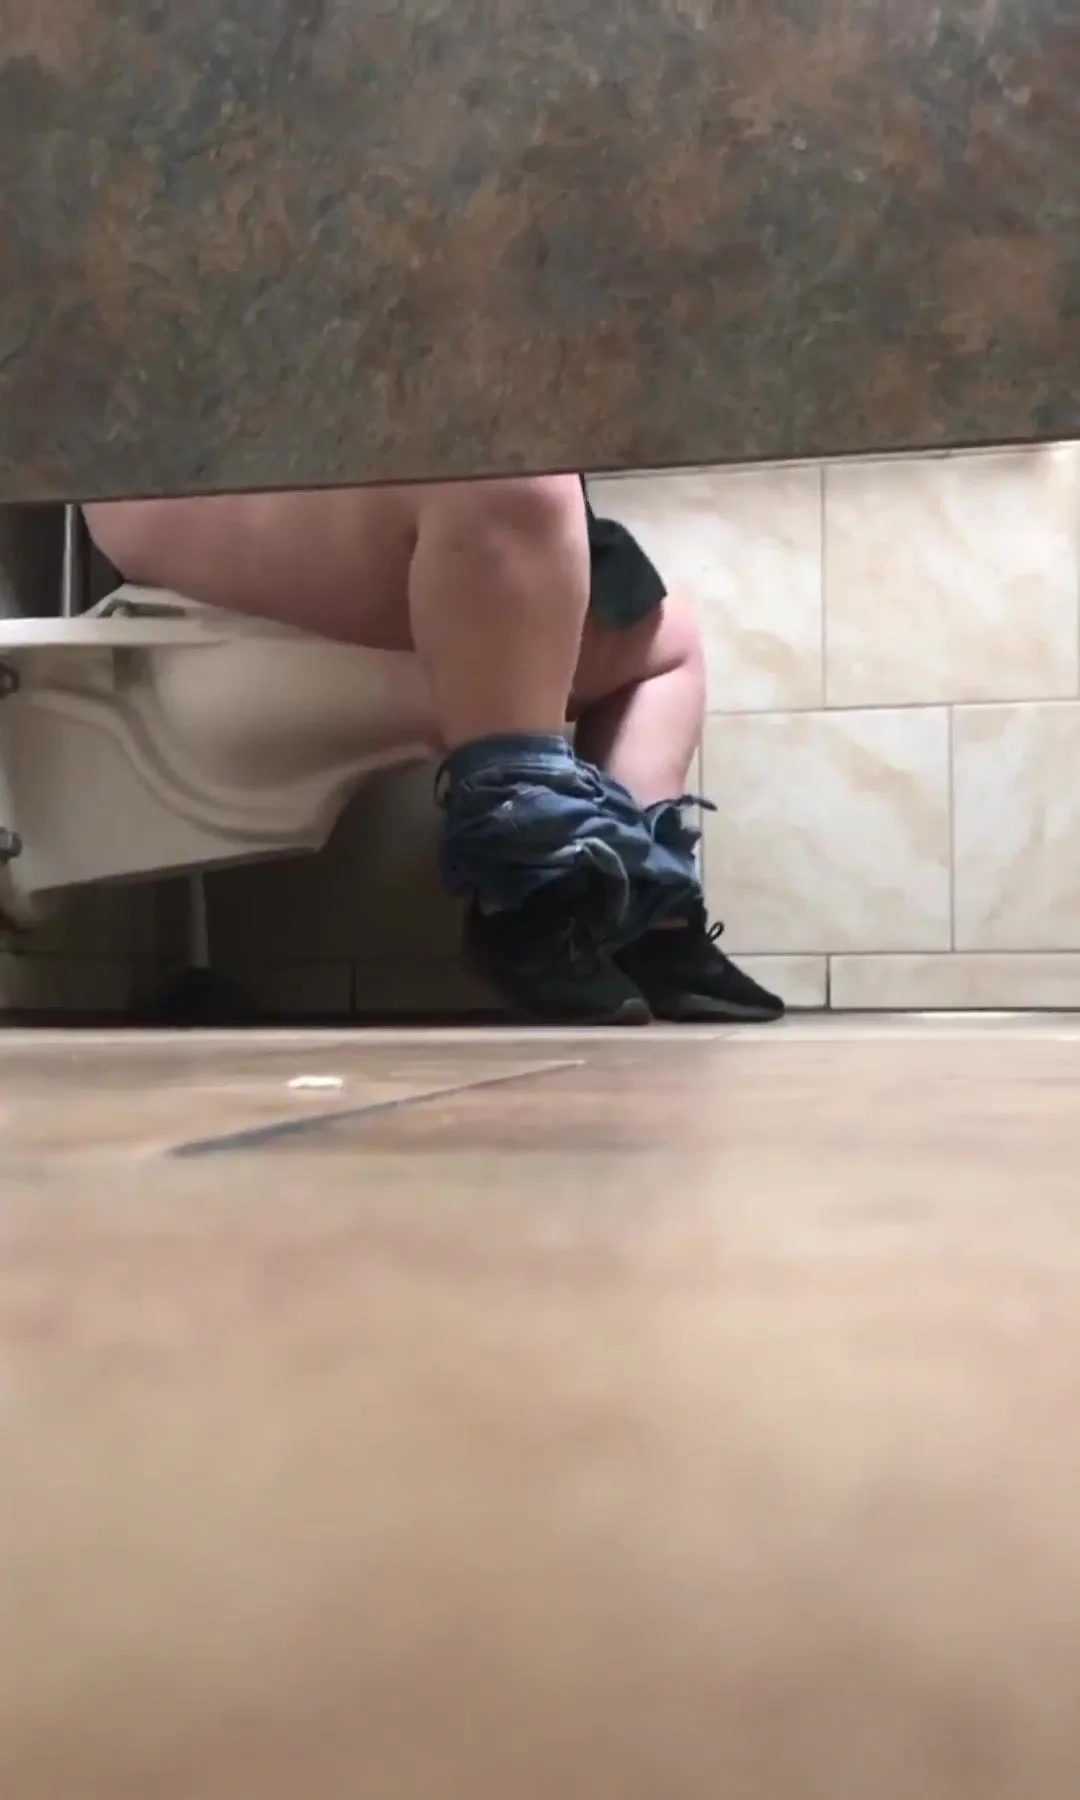 Understall Toilet Voyeur - video 2